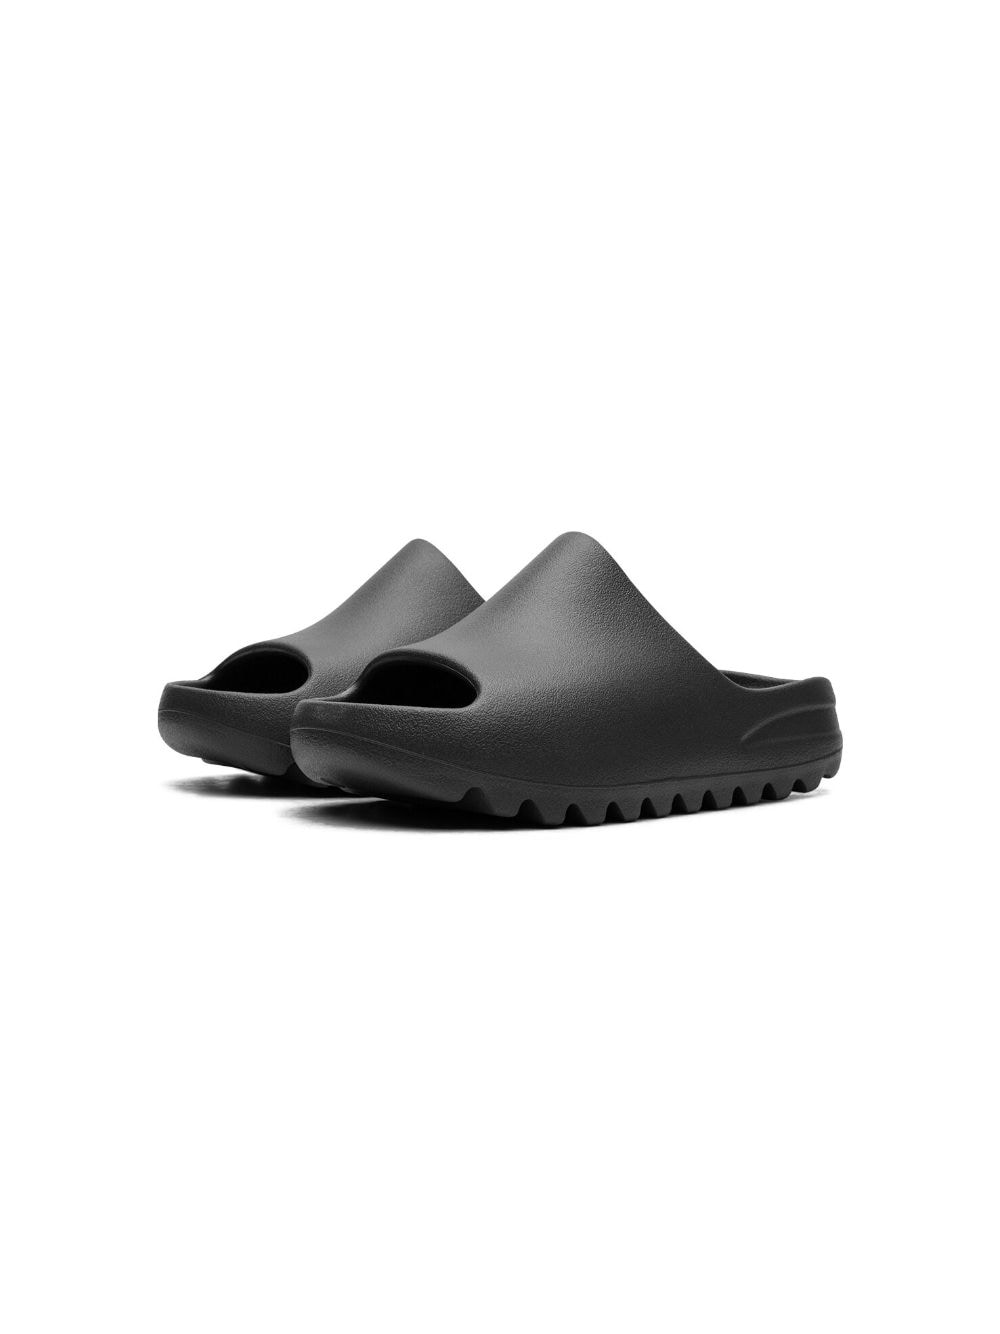 Image 2 of Adidas Yeezy Kids flip flops "Dark Onyx"